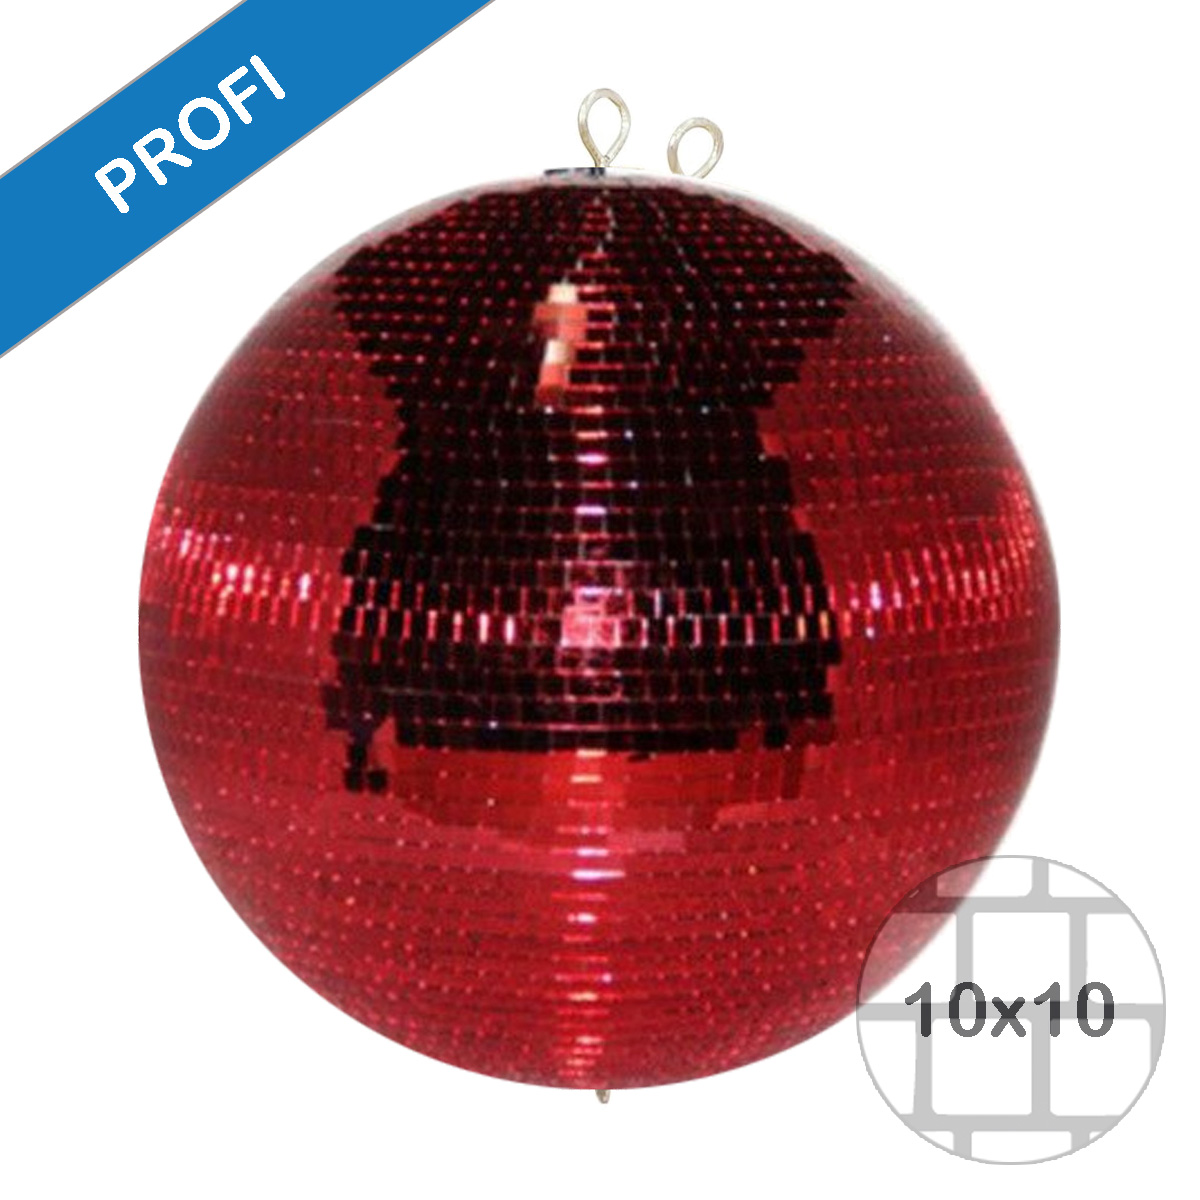 Spiegelkugel 40cm rot- Diskokugel (Discokugel) Party Lichteffekt - Echtglas - mirrorball safety red color